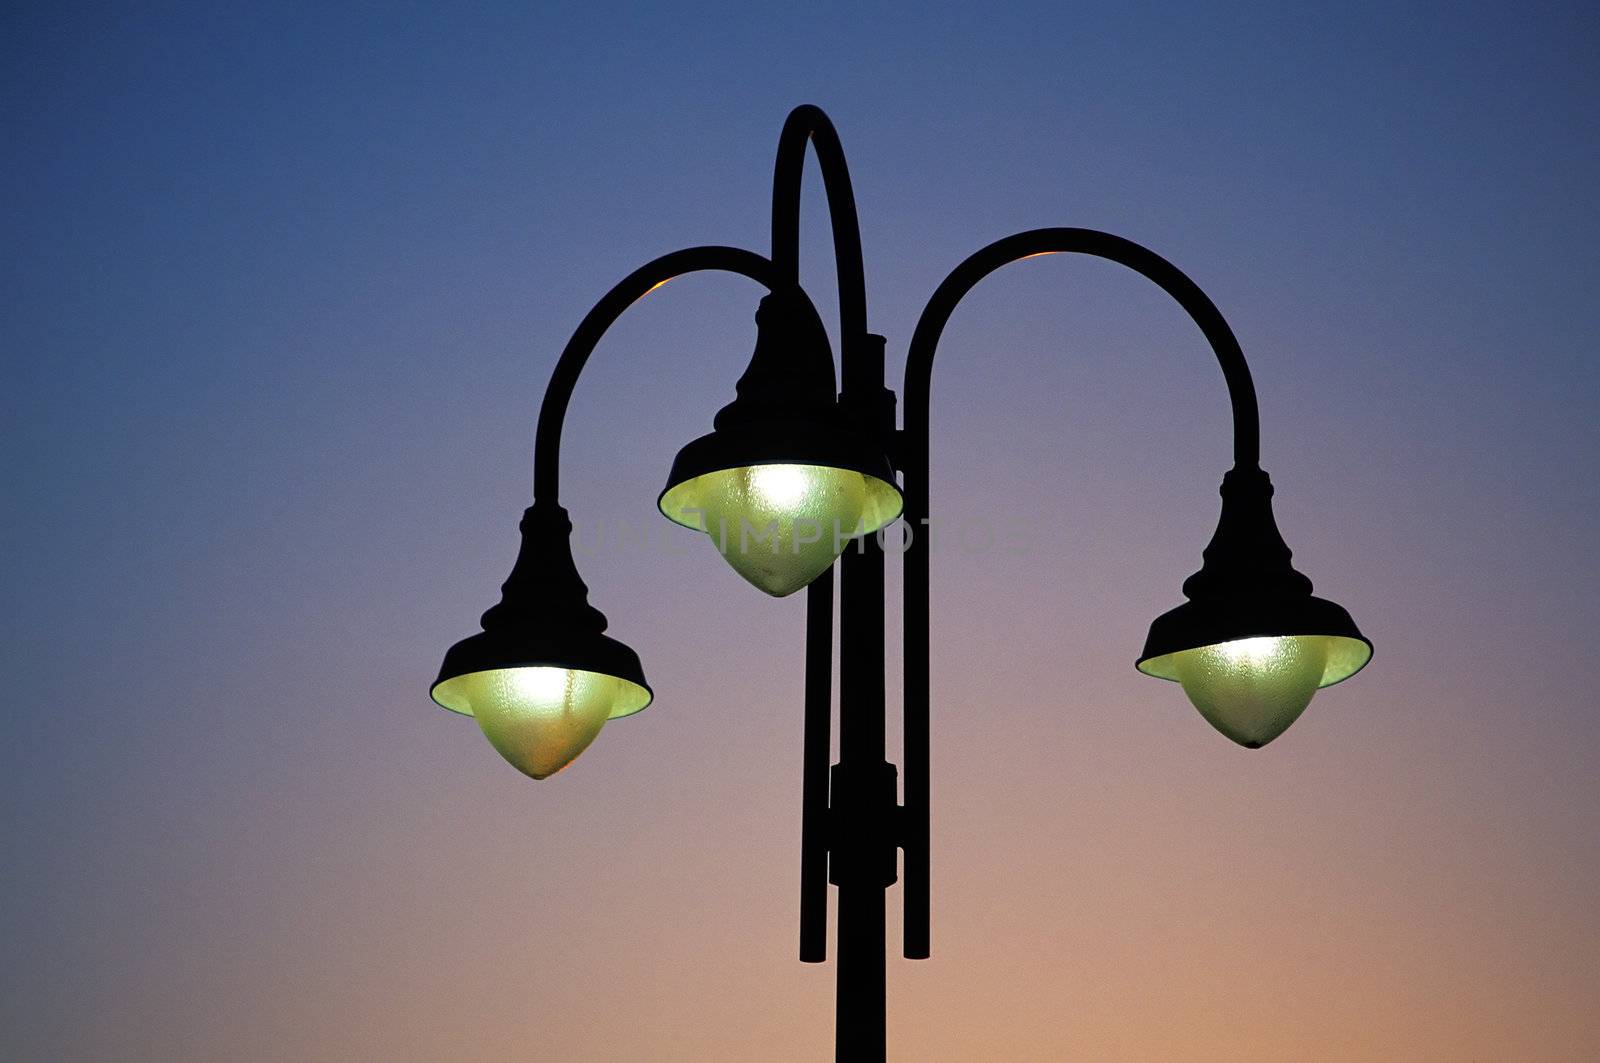 Three street lights in a city park